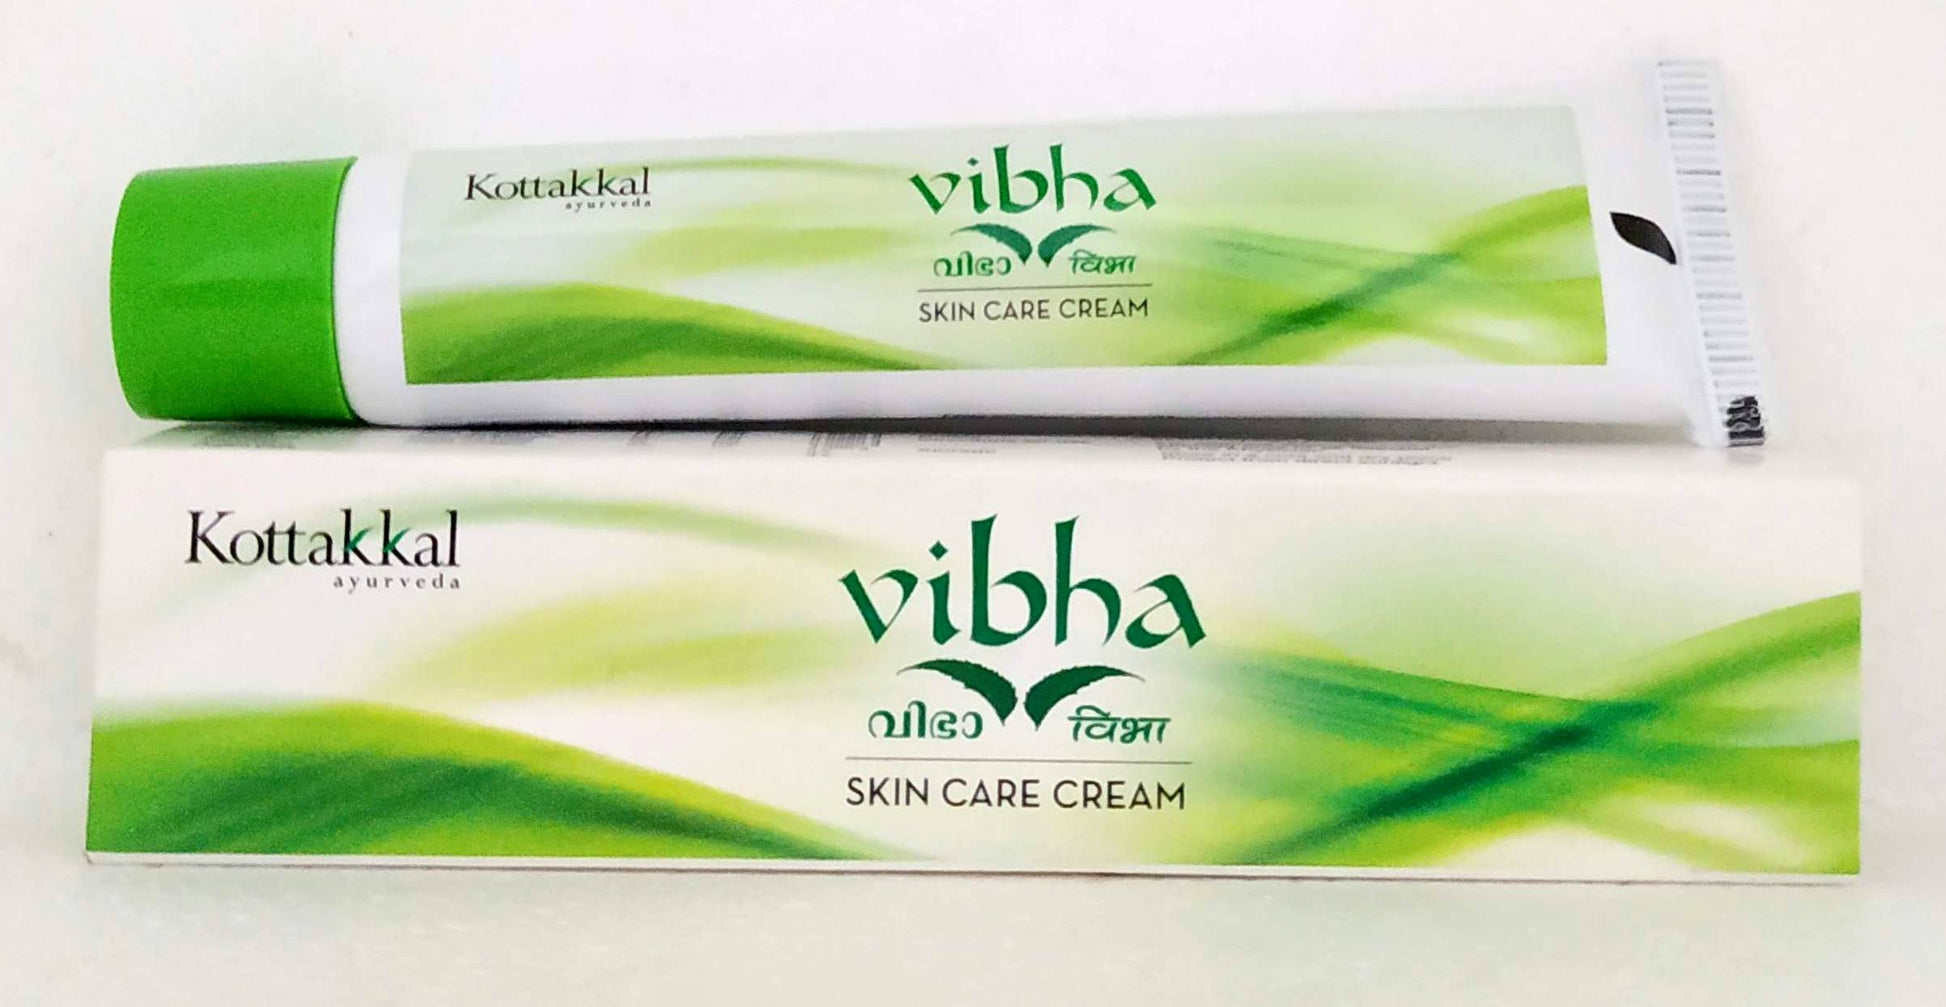 Vibha skin care cream 25gm -  Kottakkal - Medizzo.com